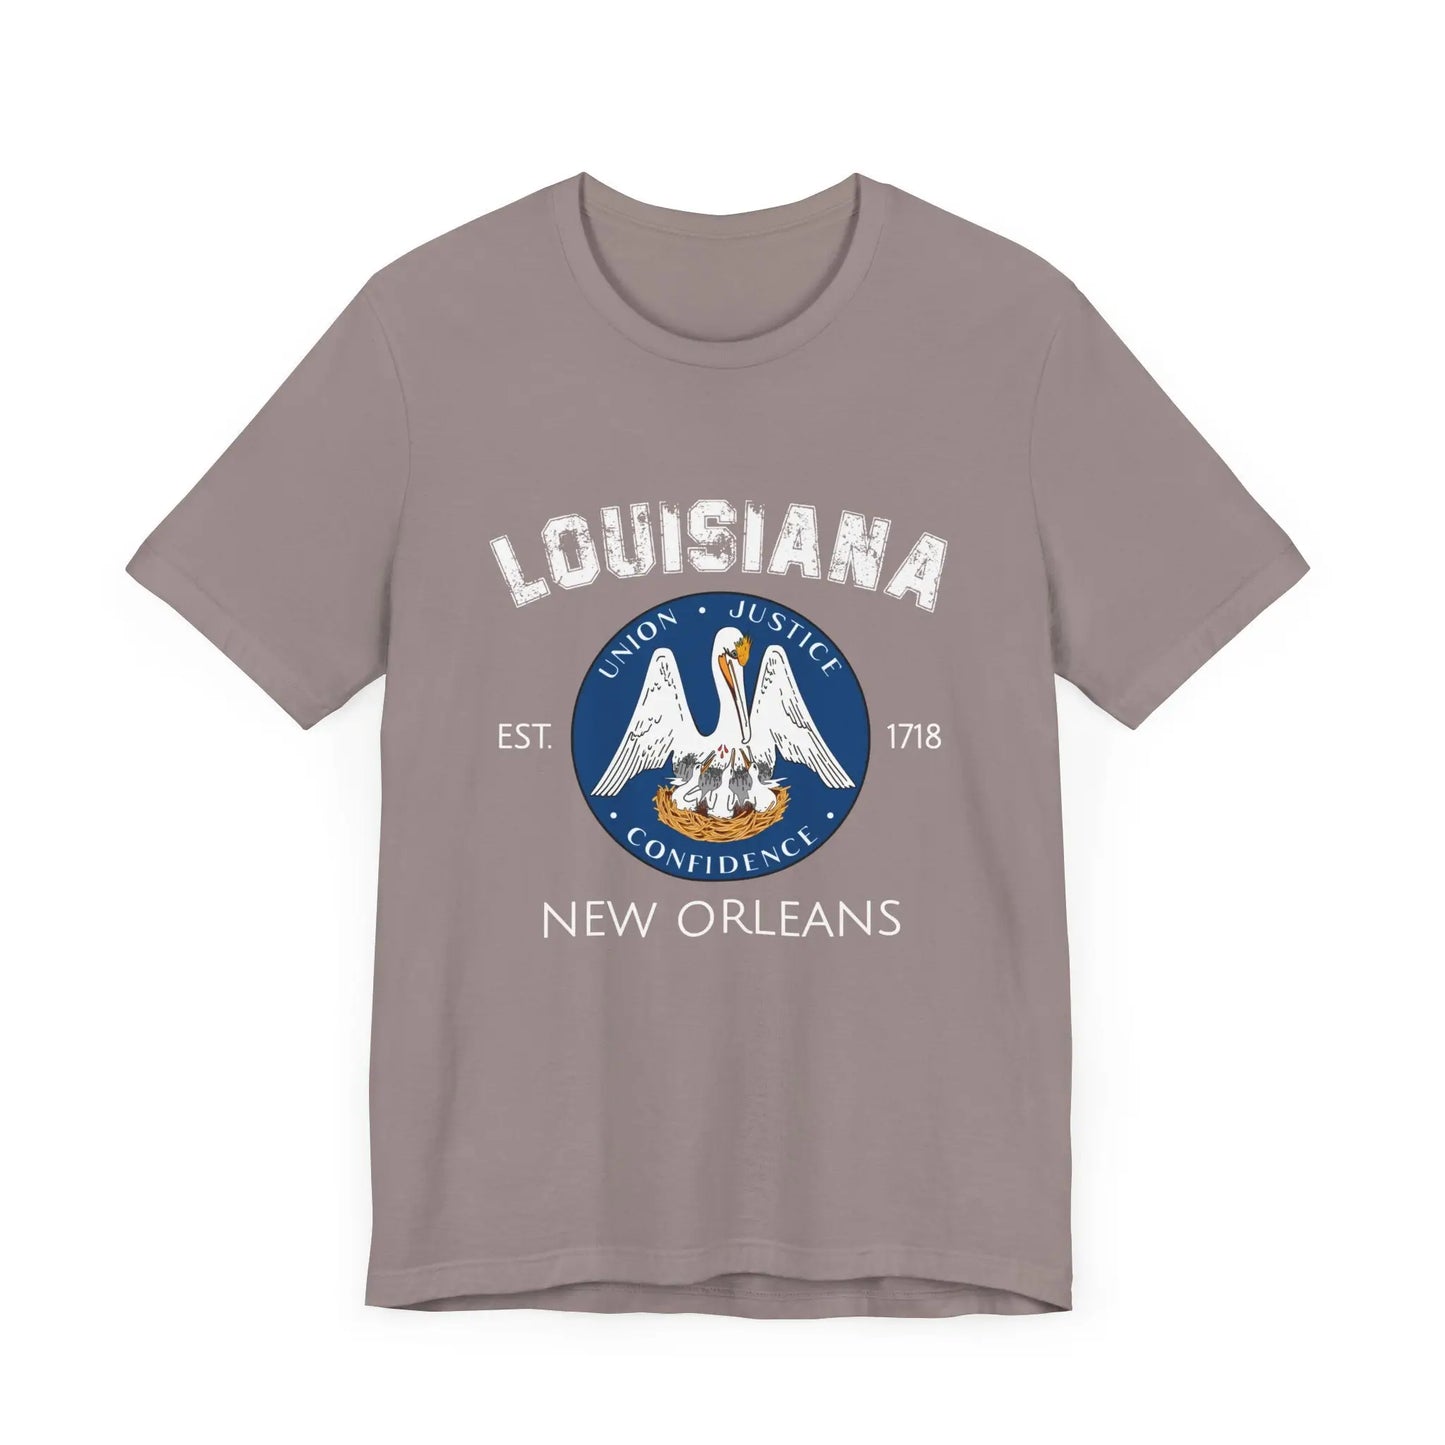 New Orleans Louisiana Est 1718 Men's Tee - Wicked Tees